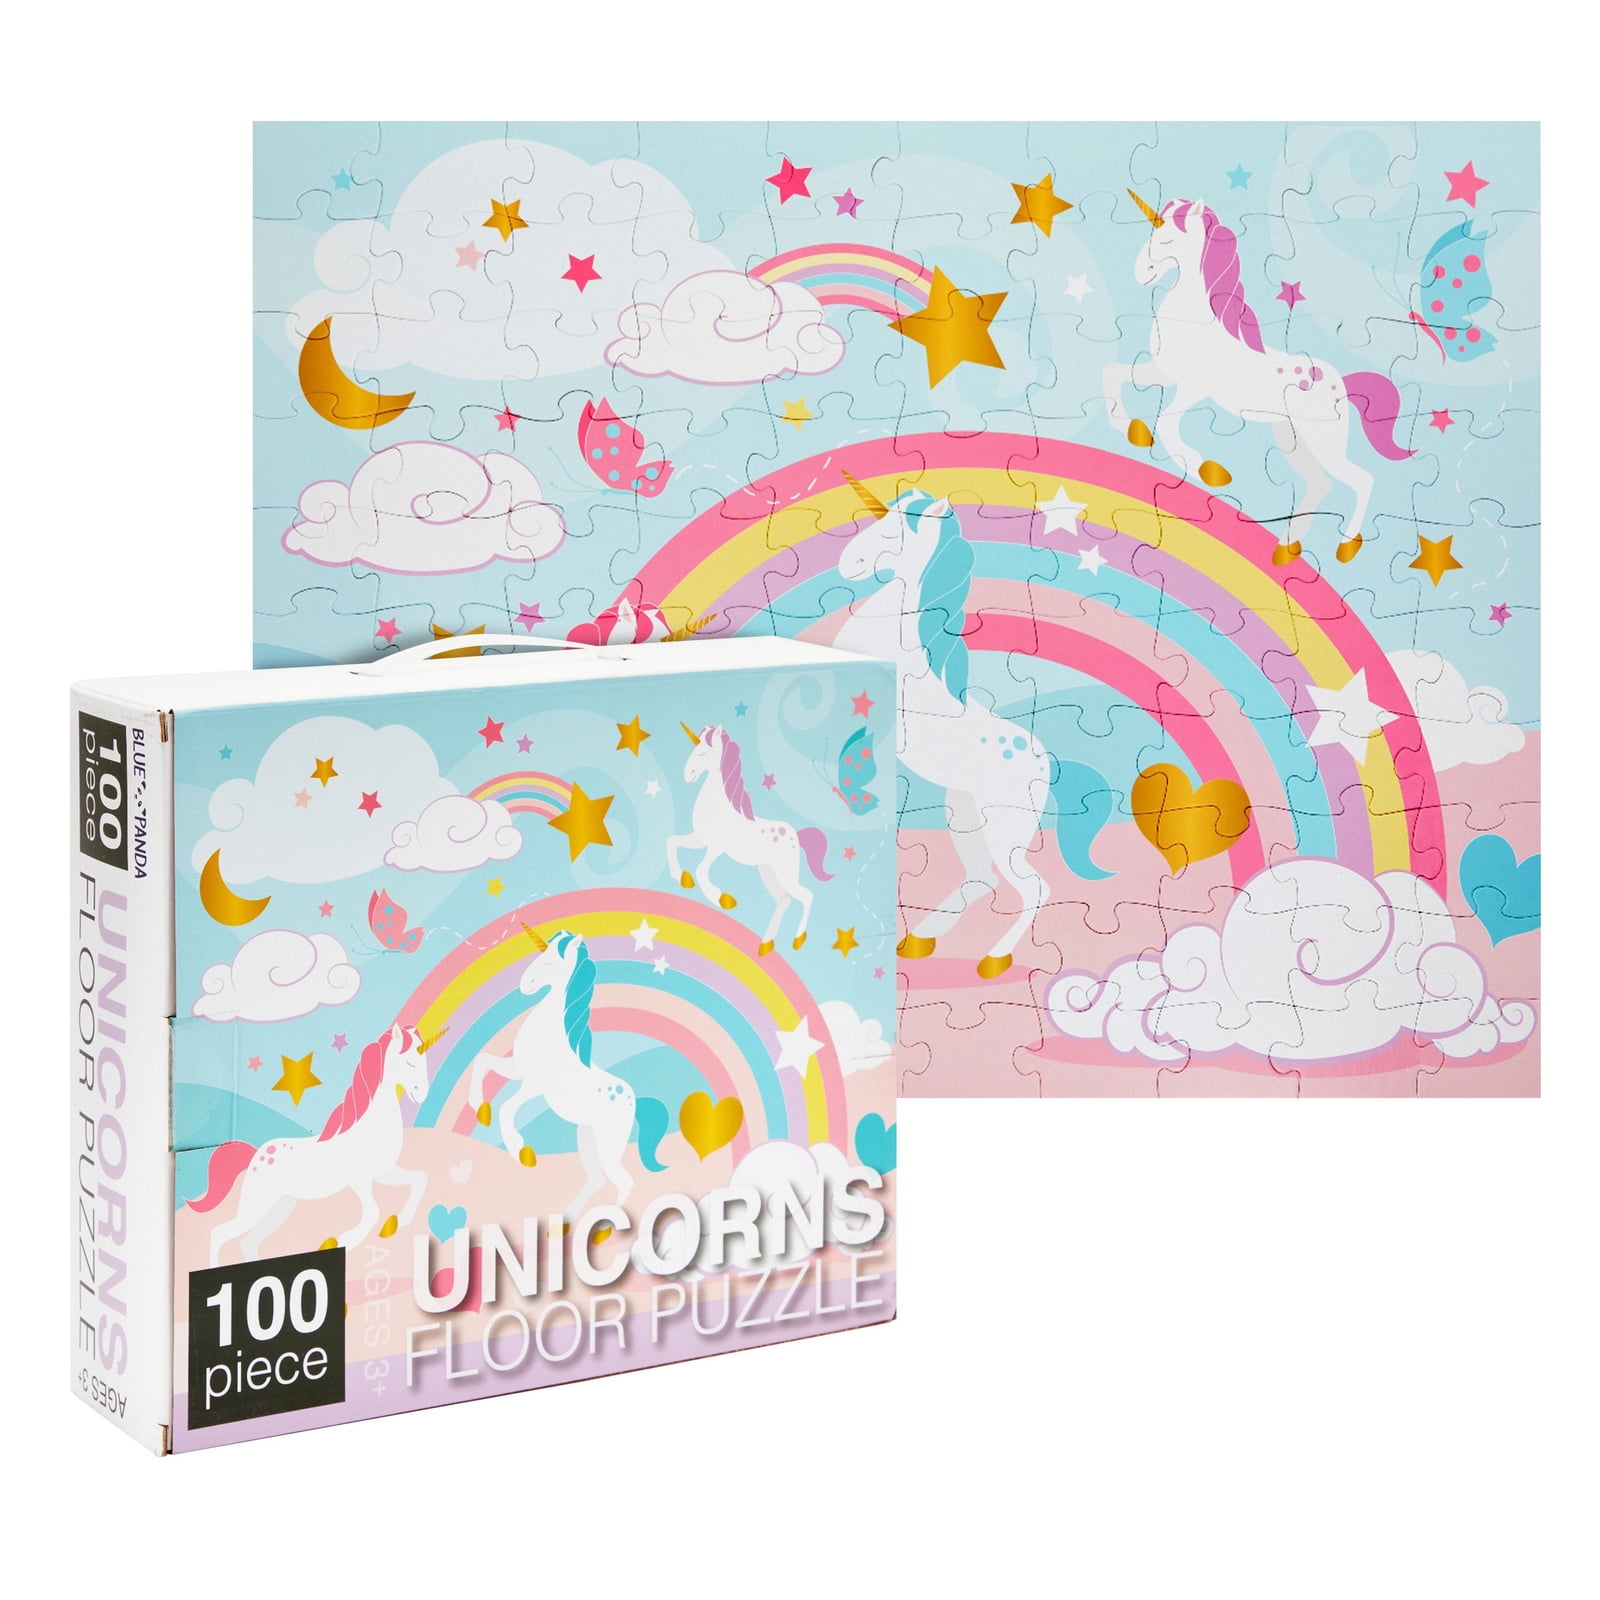 Rainbow Unicorn Jumbo Jigsaw Puzzles for Toddlers Preschool 100-Piece Giant Floor Puzzle 2 x 3 Feet Toy Puzzles for Kids Ages 3-5 Blue Panda Floor Puzzles for Kids